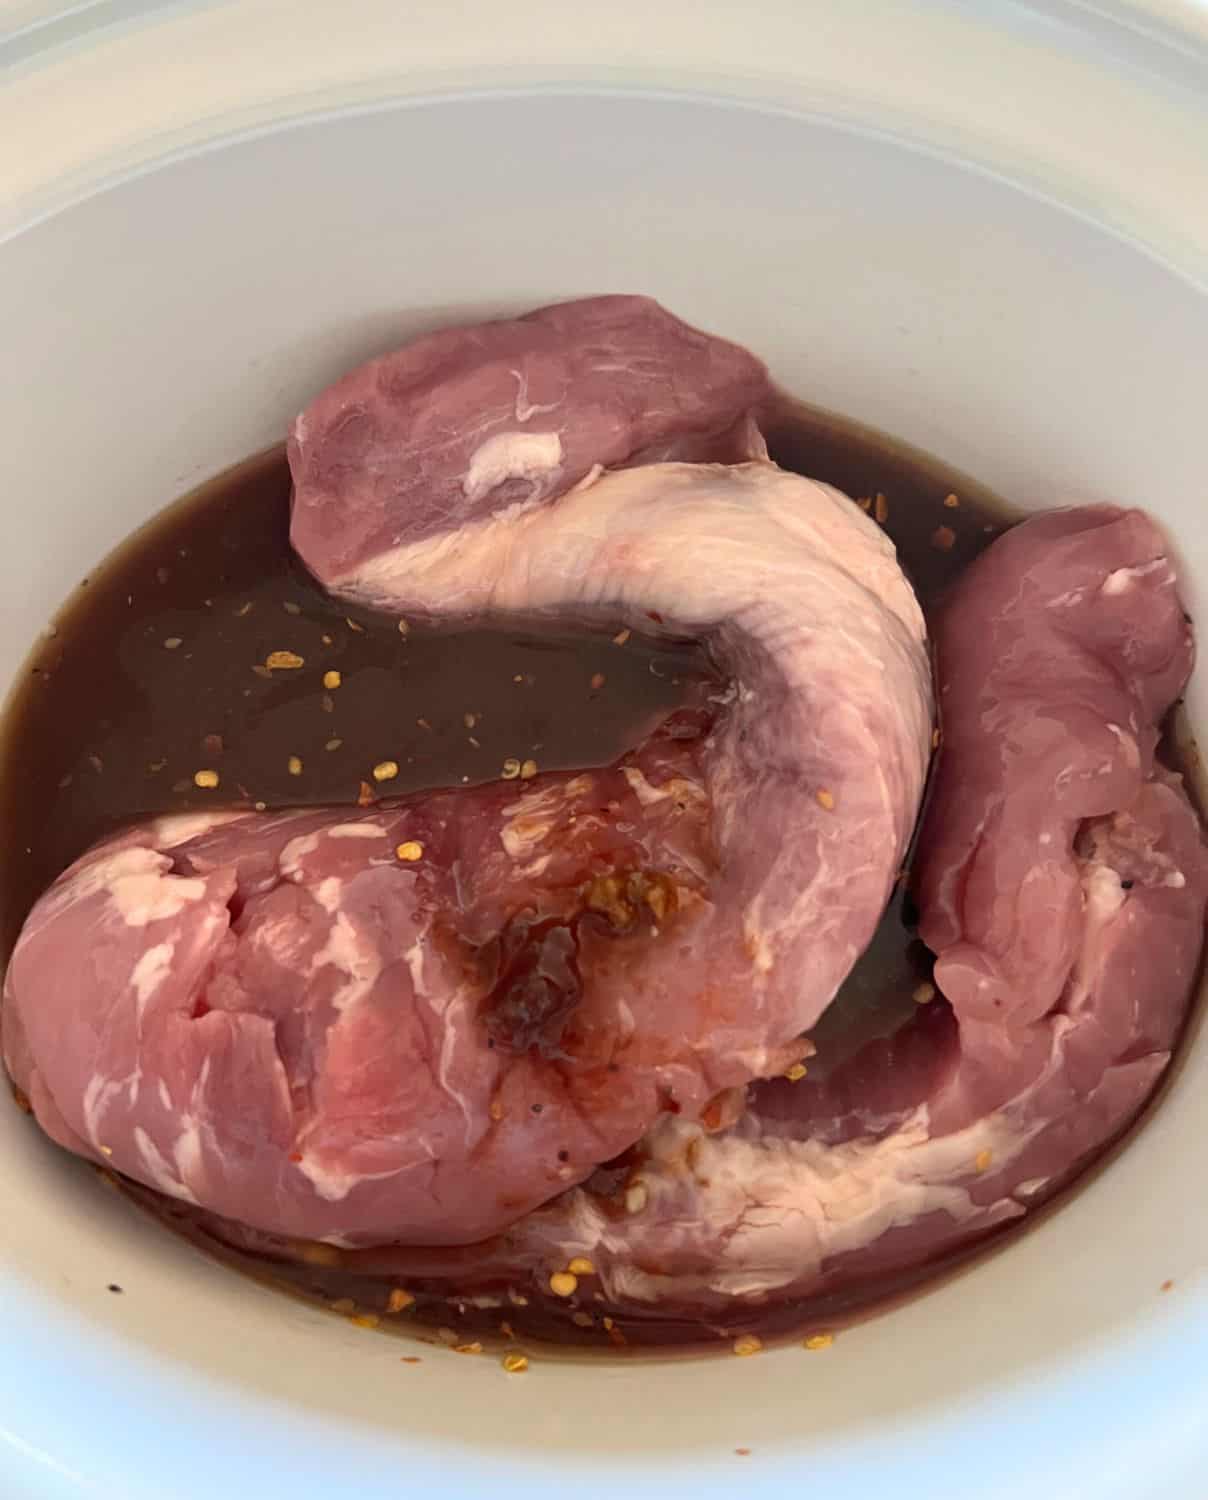 Pork tenderloins with sauce in a crock pot. 